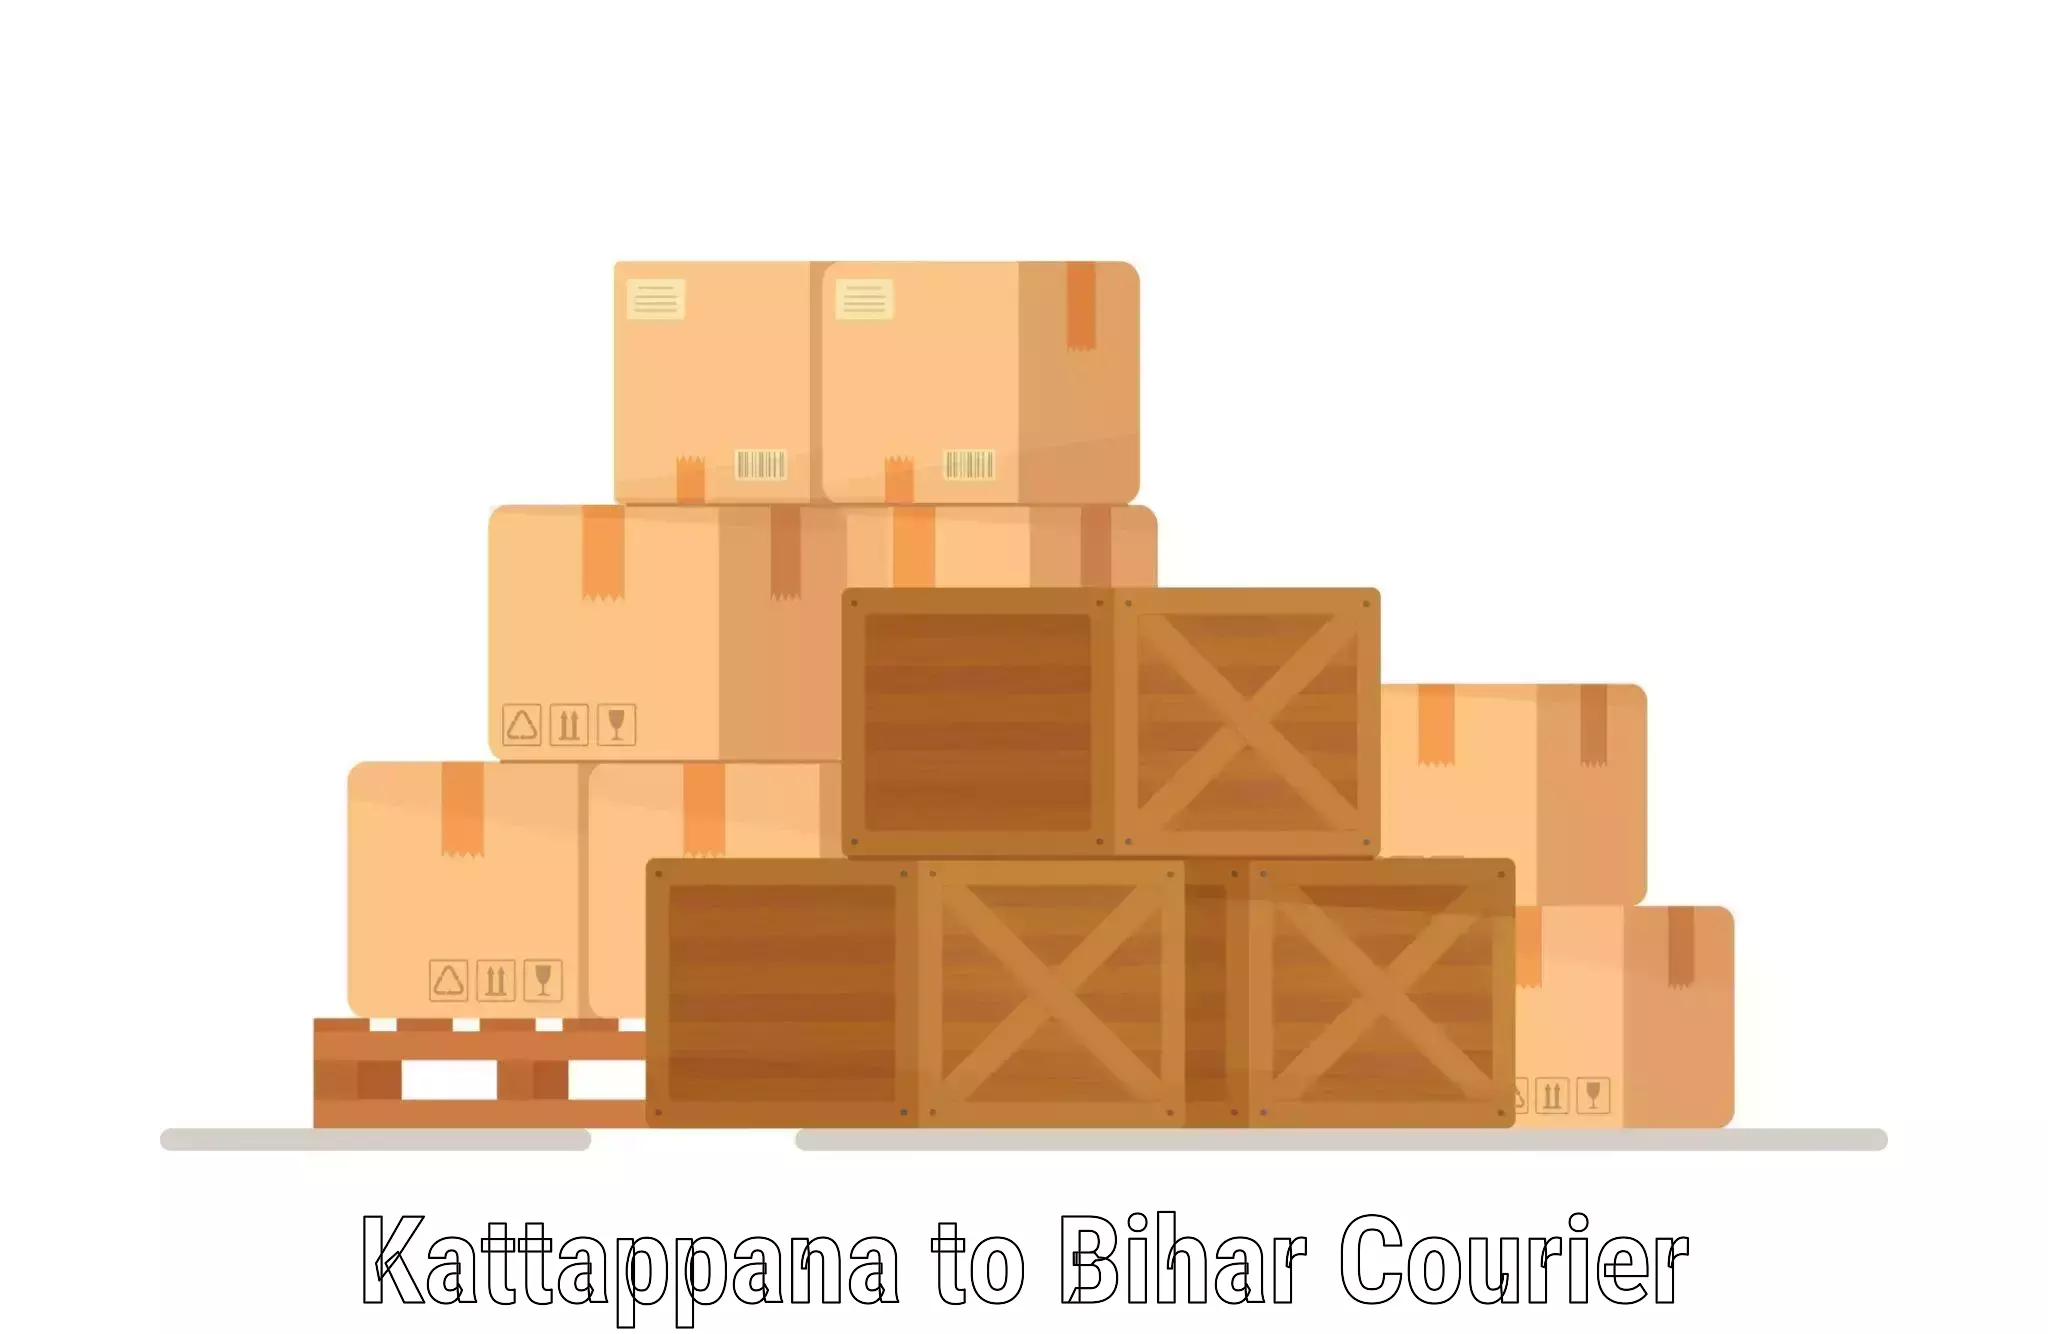 24/7 courier service Kattappana to Sasaram